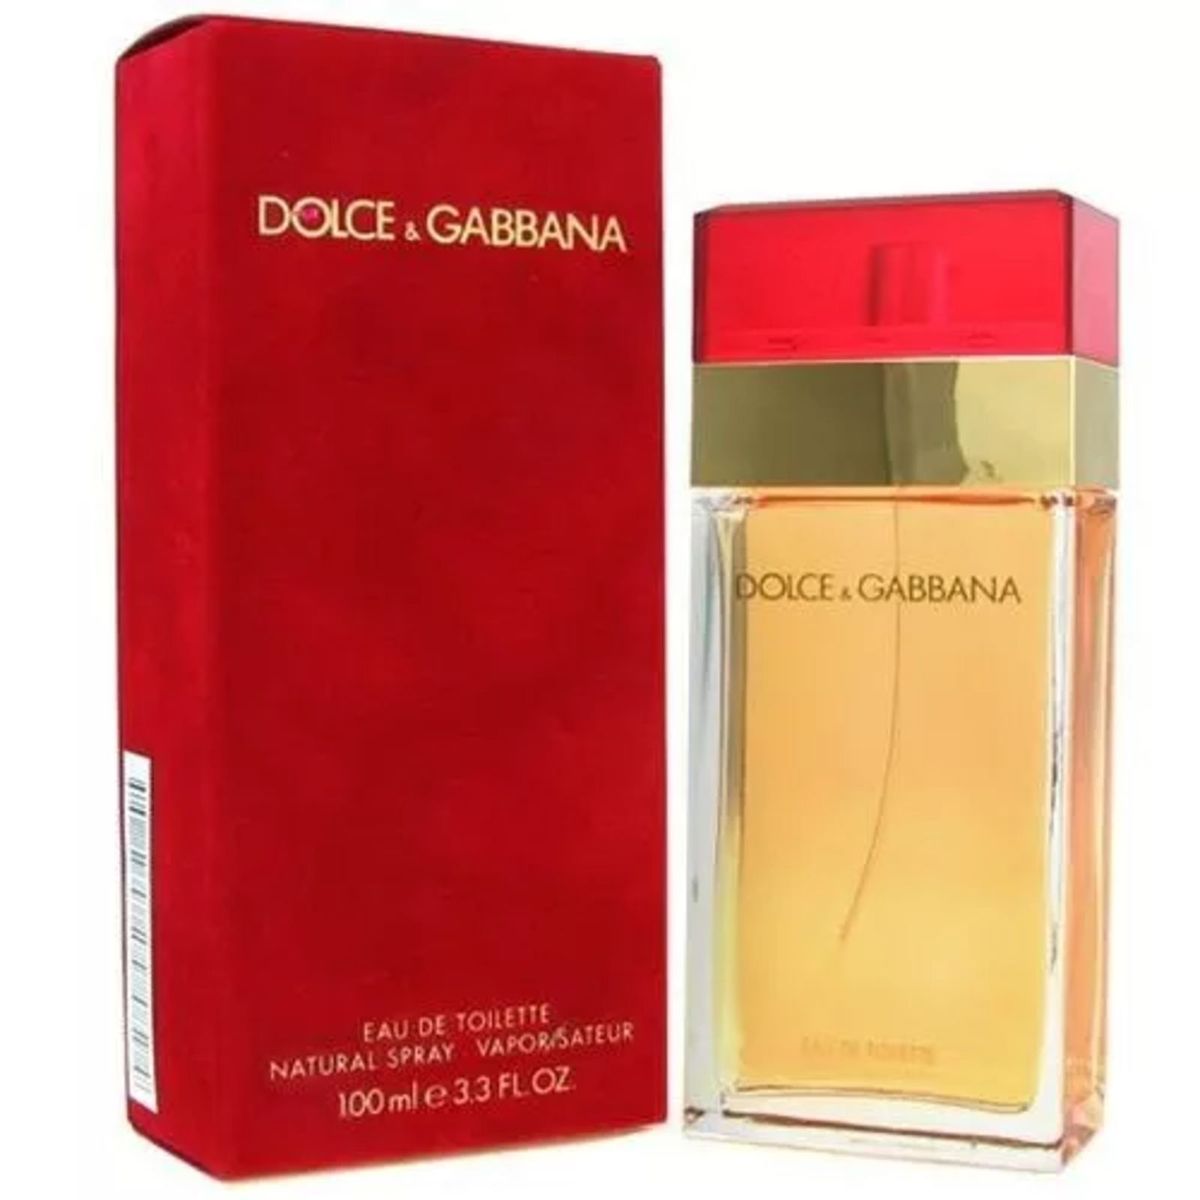 dolce gabbana original red perfume